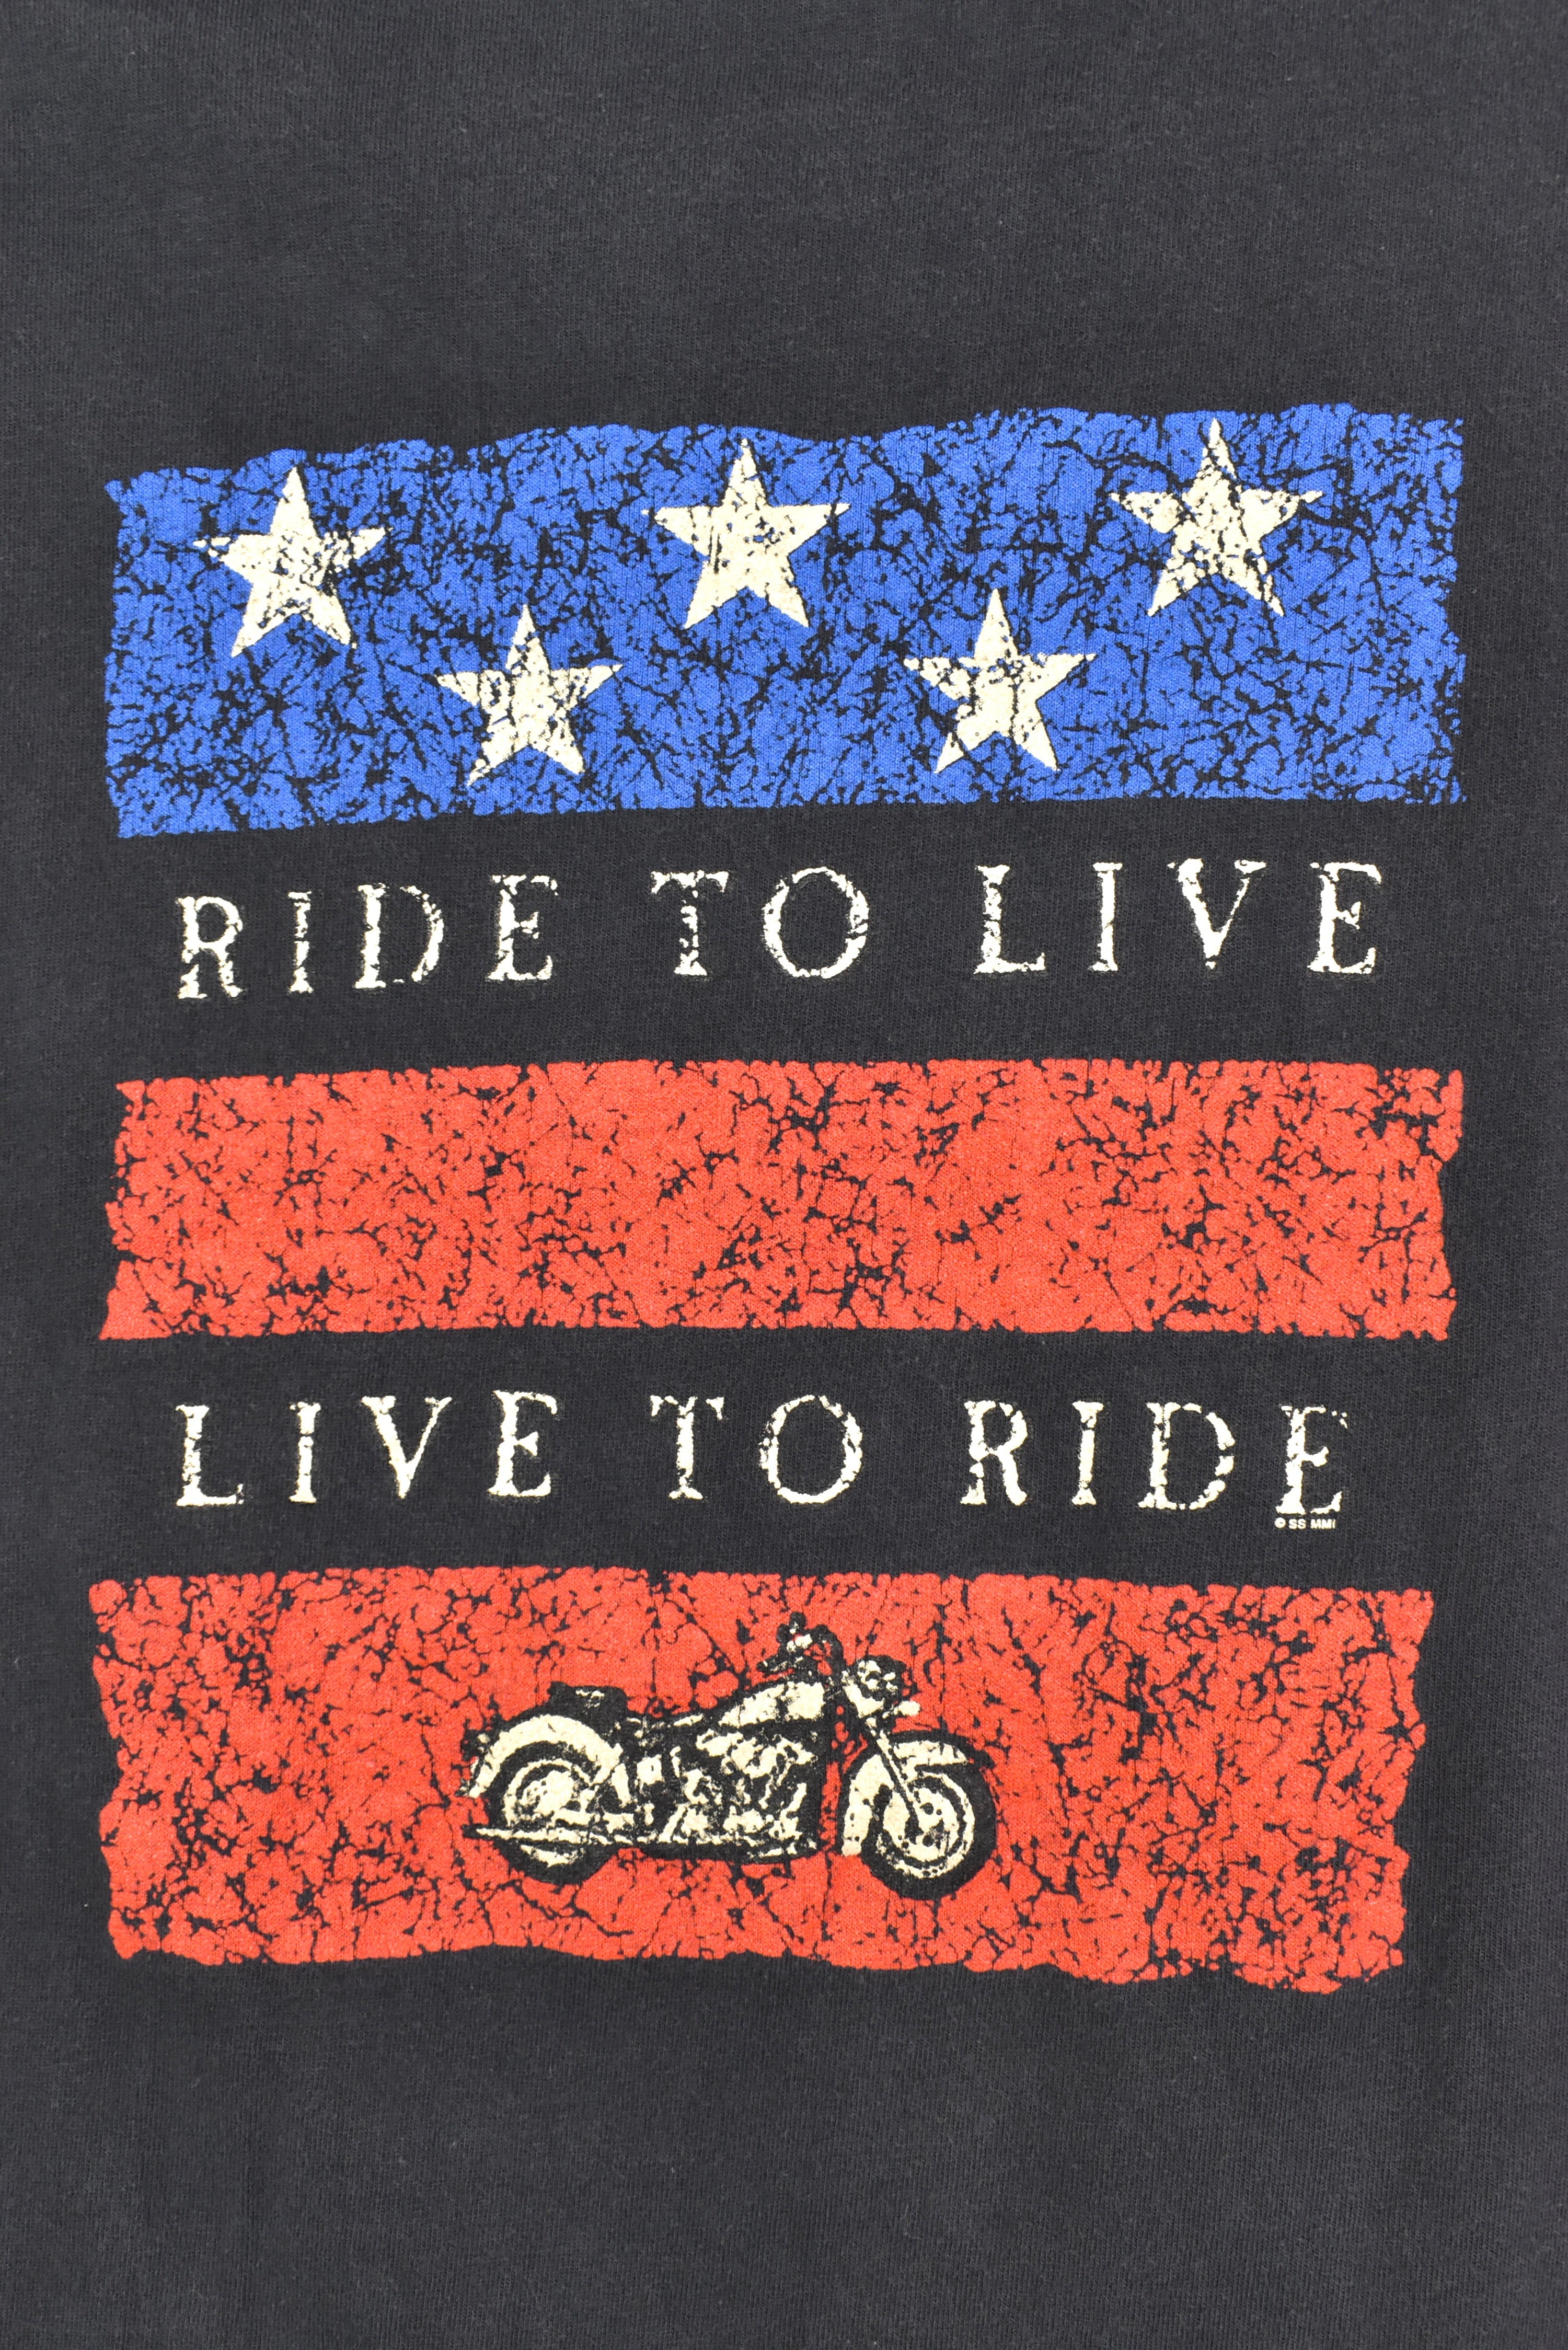 Vintage Sturgis shirt, 2001 motorcycle biker graphic tee - large, black HARLEY DAVIDSON